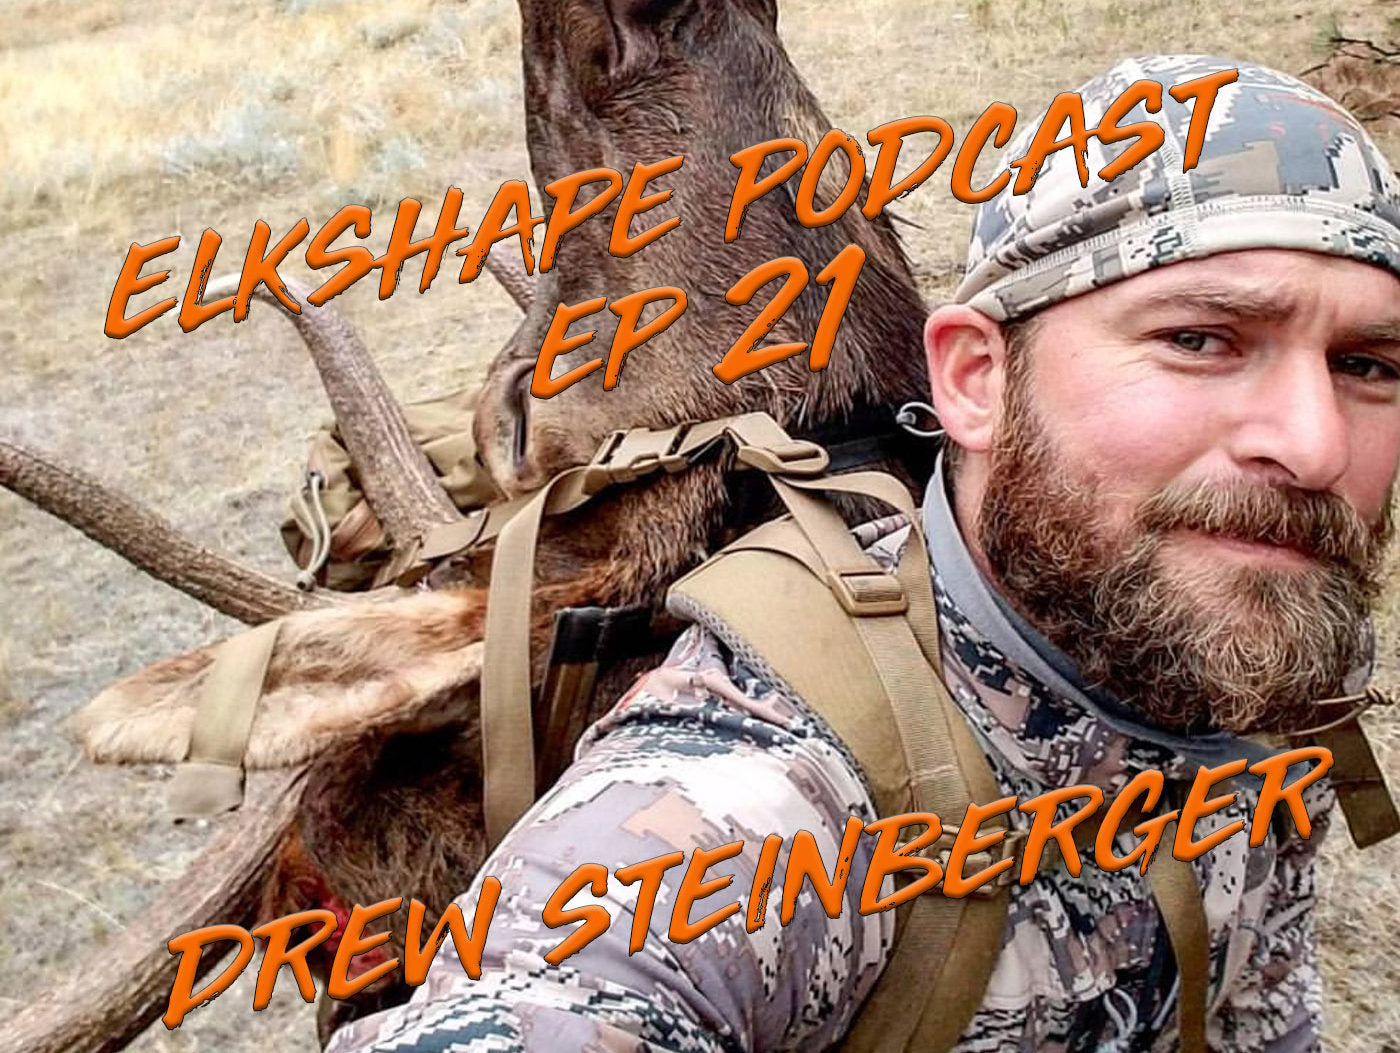 ElkShape Podcast EP 21 - Drew Steinberger